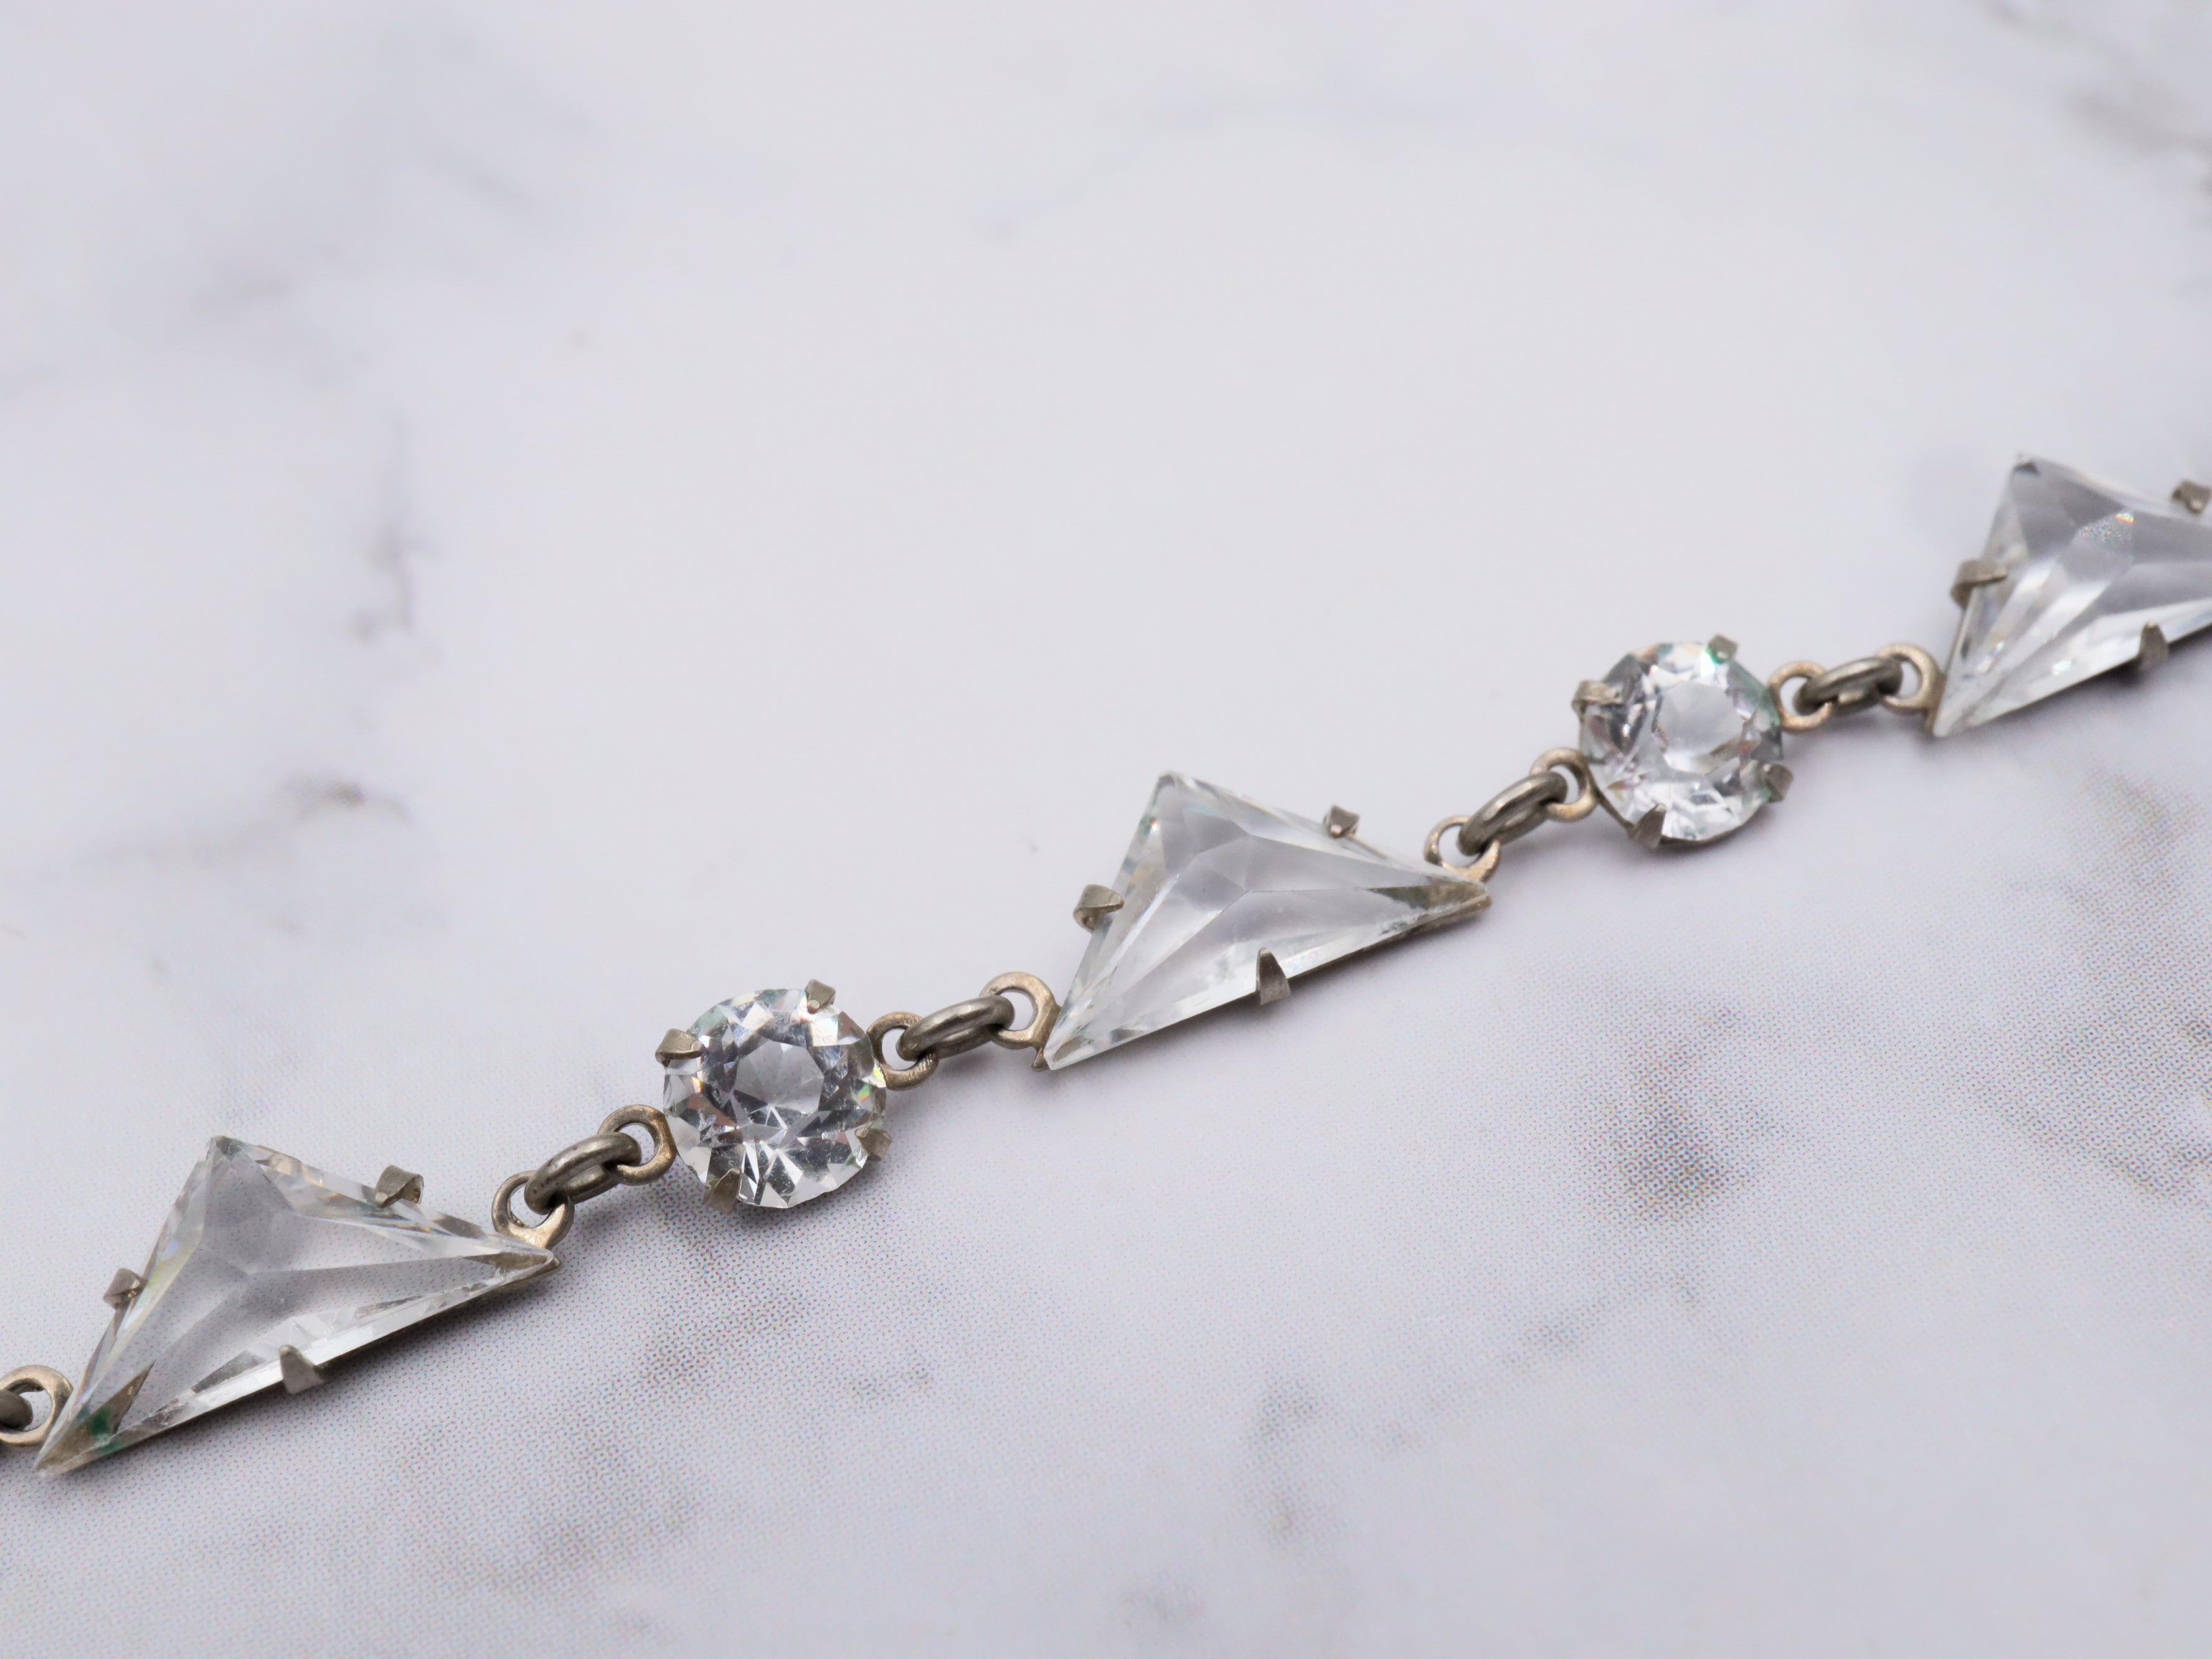 Antique art deco silver tone open back crystal chandelier necklace